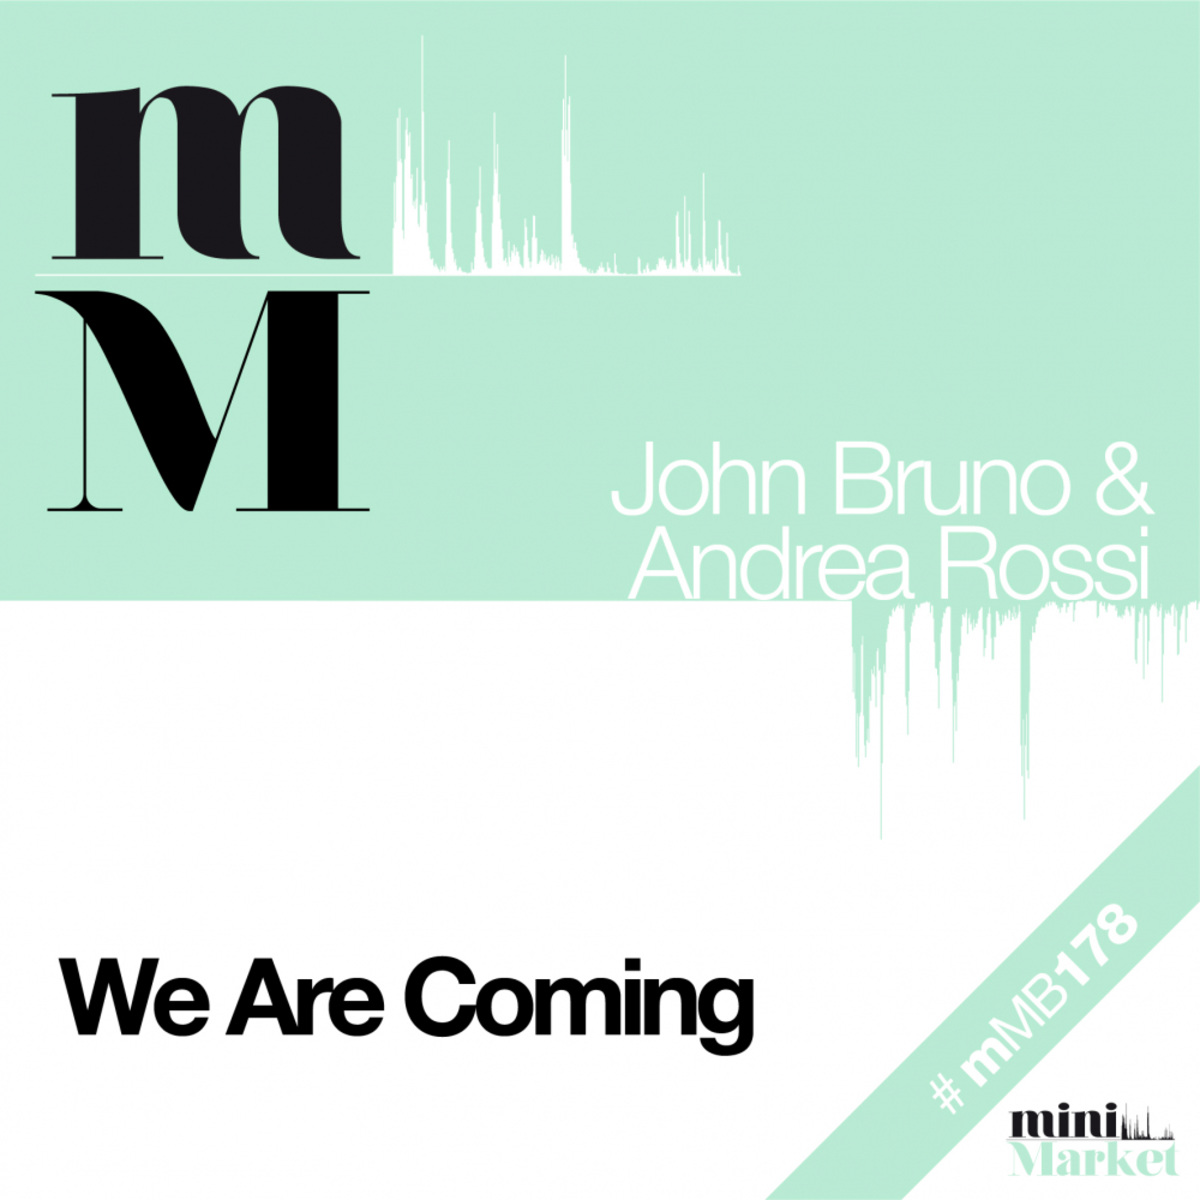 Andrea Rossi & John Bruno - We Are Coming / miniMarket